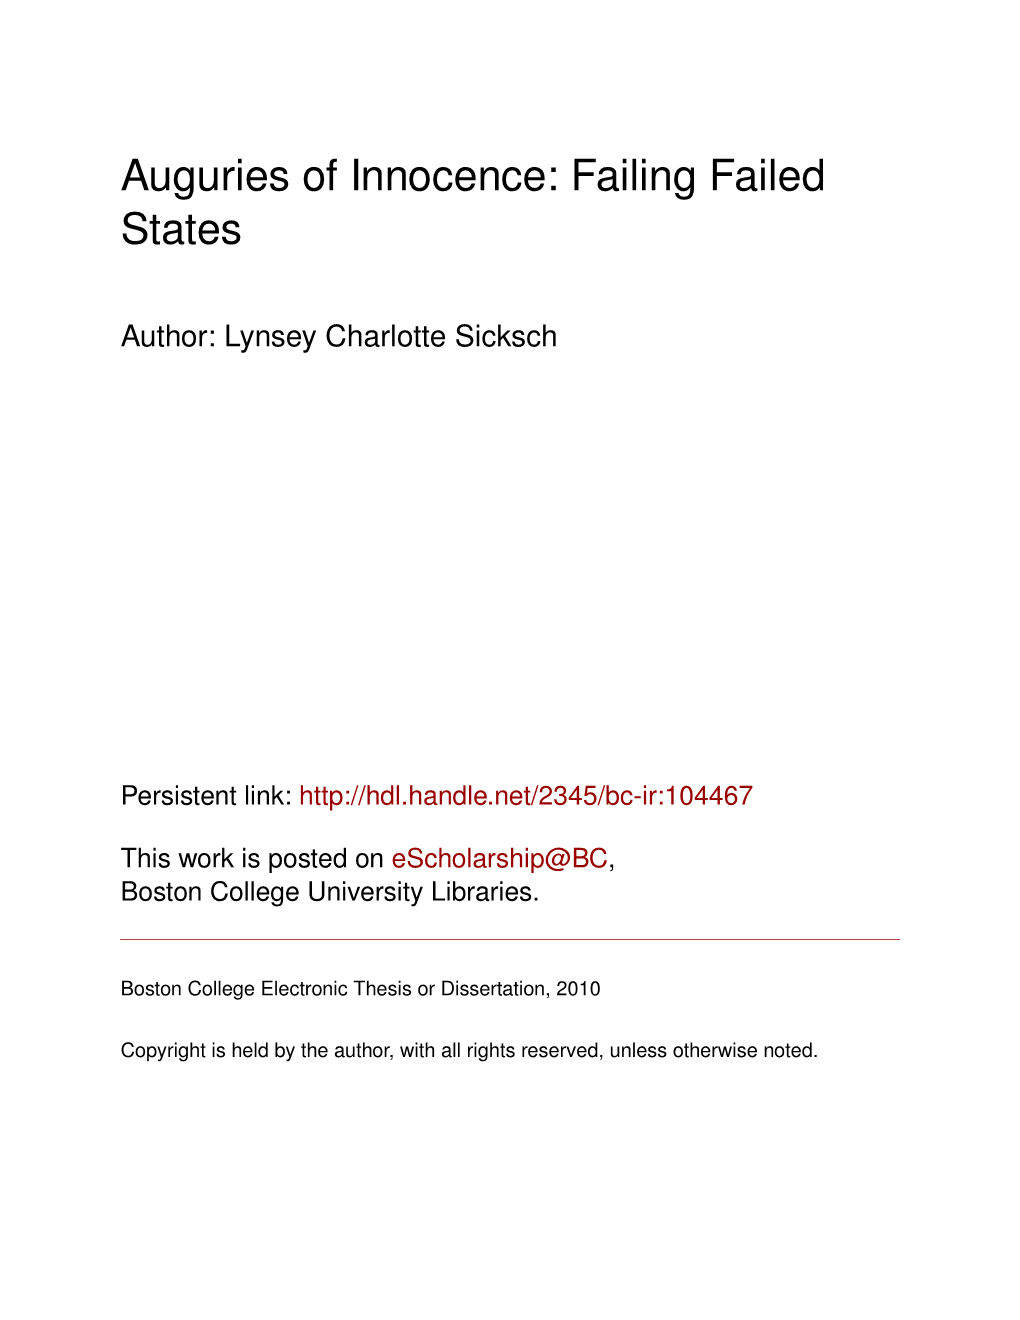 Auguries of Innocence: Failing Failed States